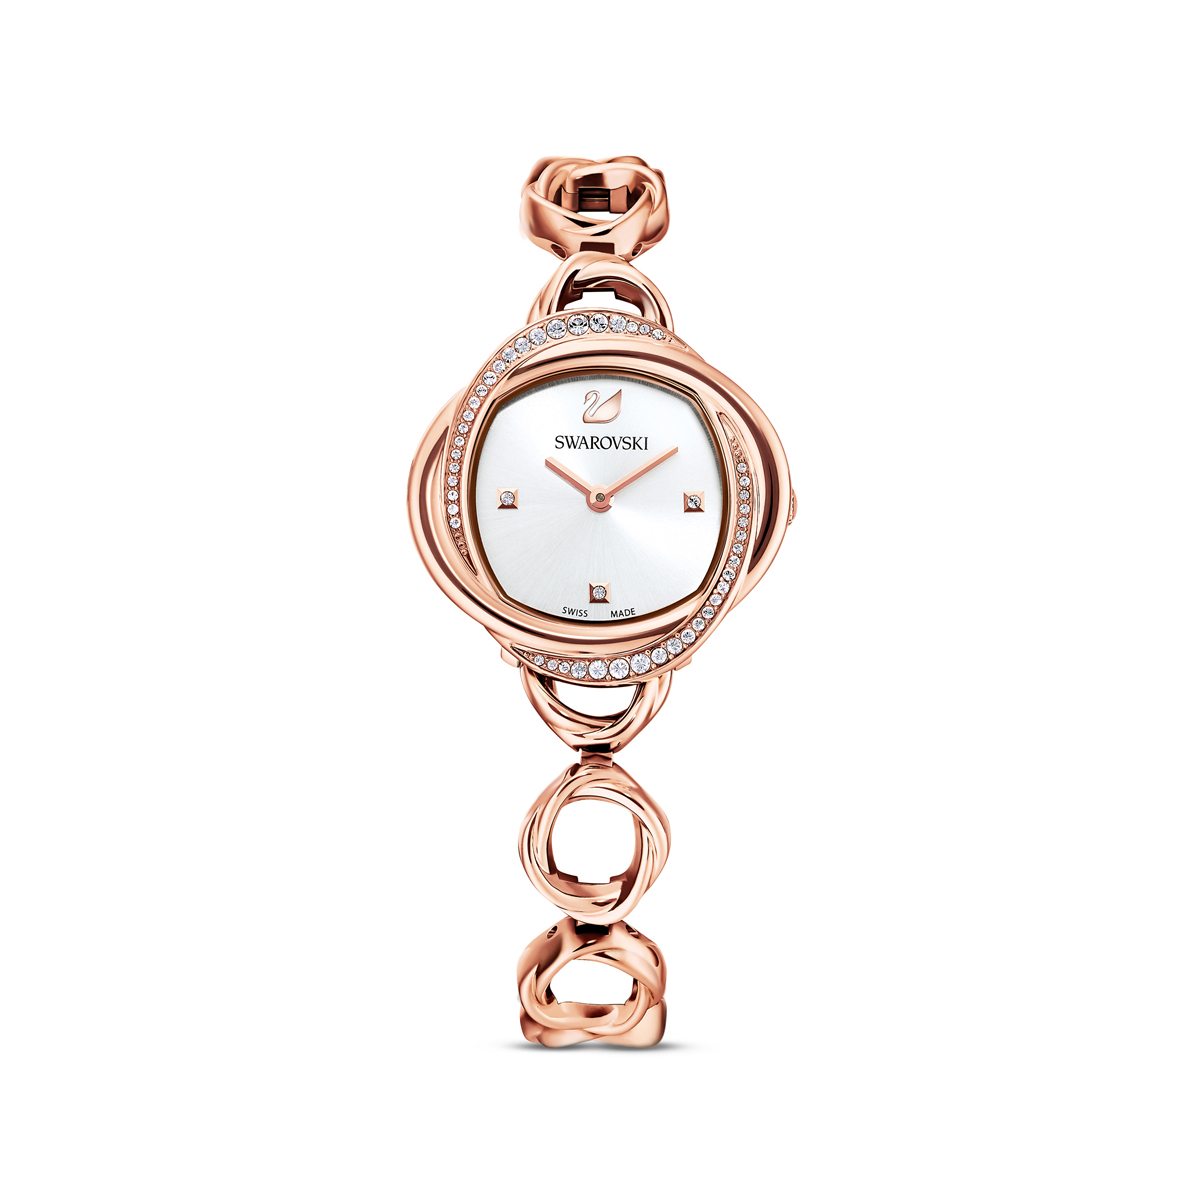 Swarovski Crystal Flower Watch, Metal Bracelet, Rose Gold Tone, Rose Gold Tone